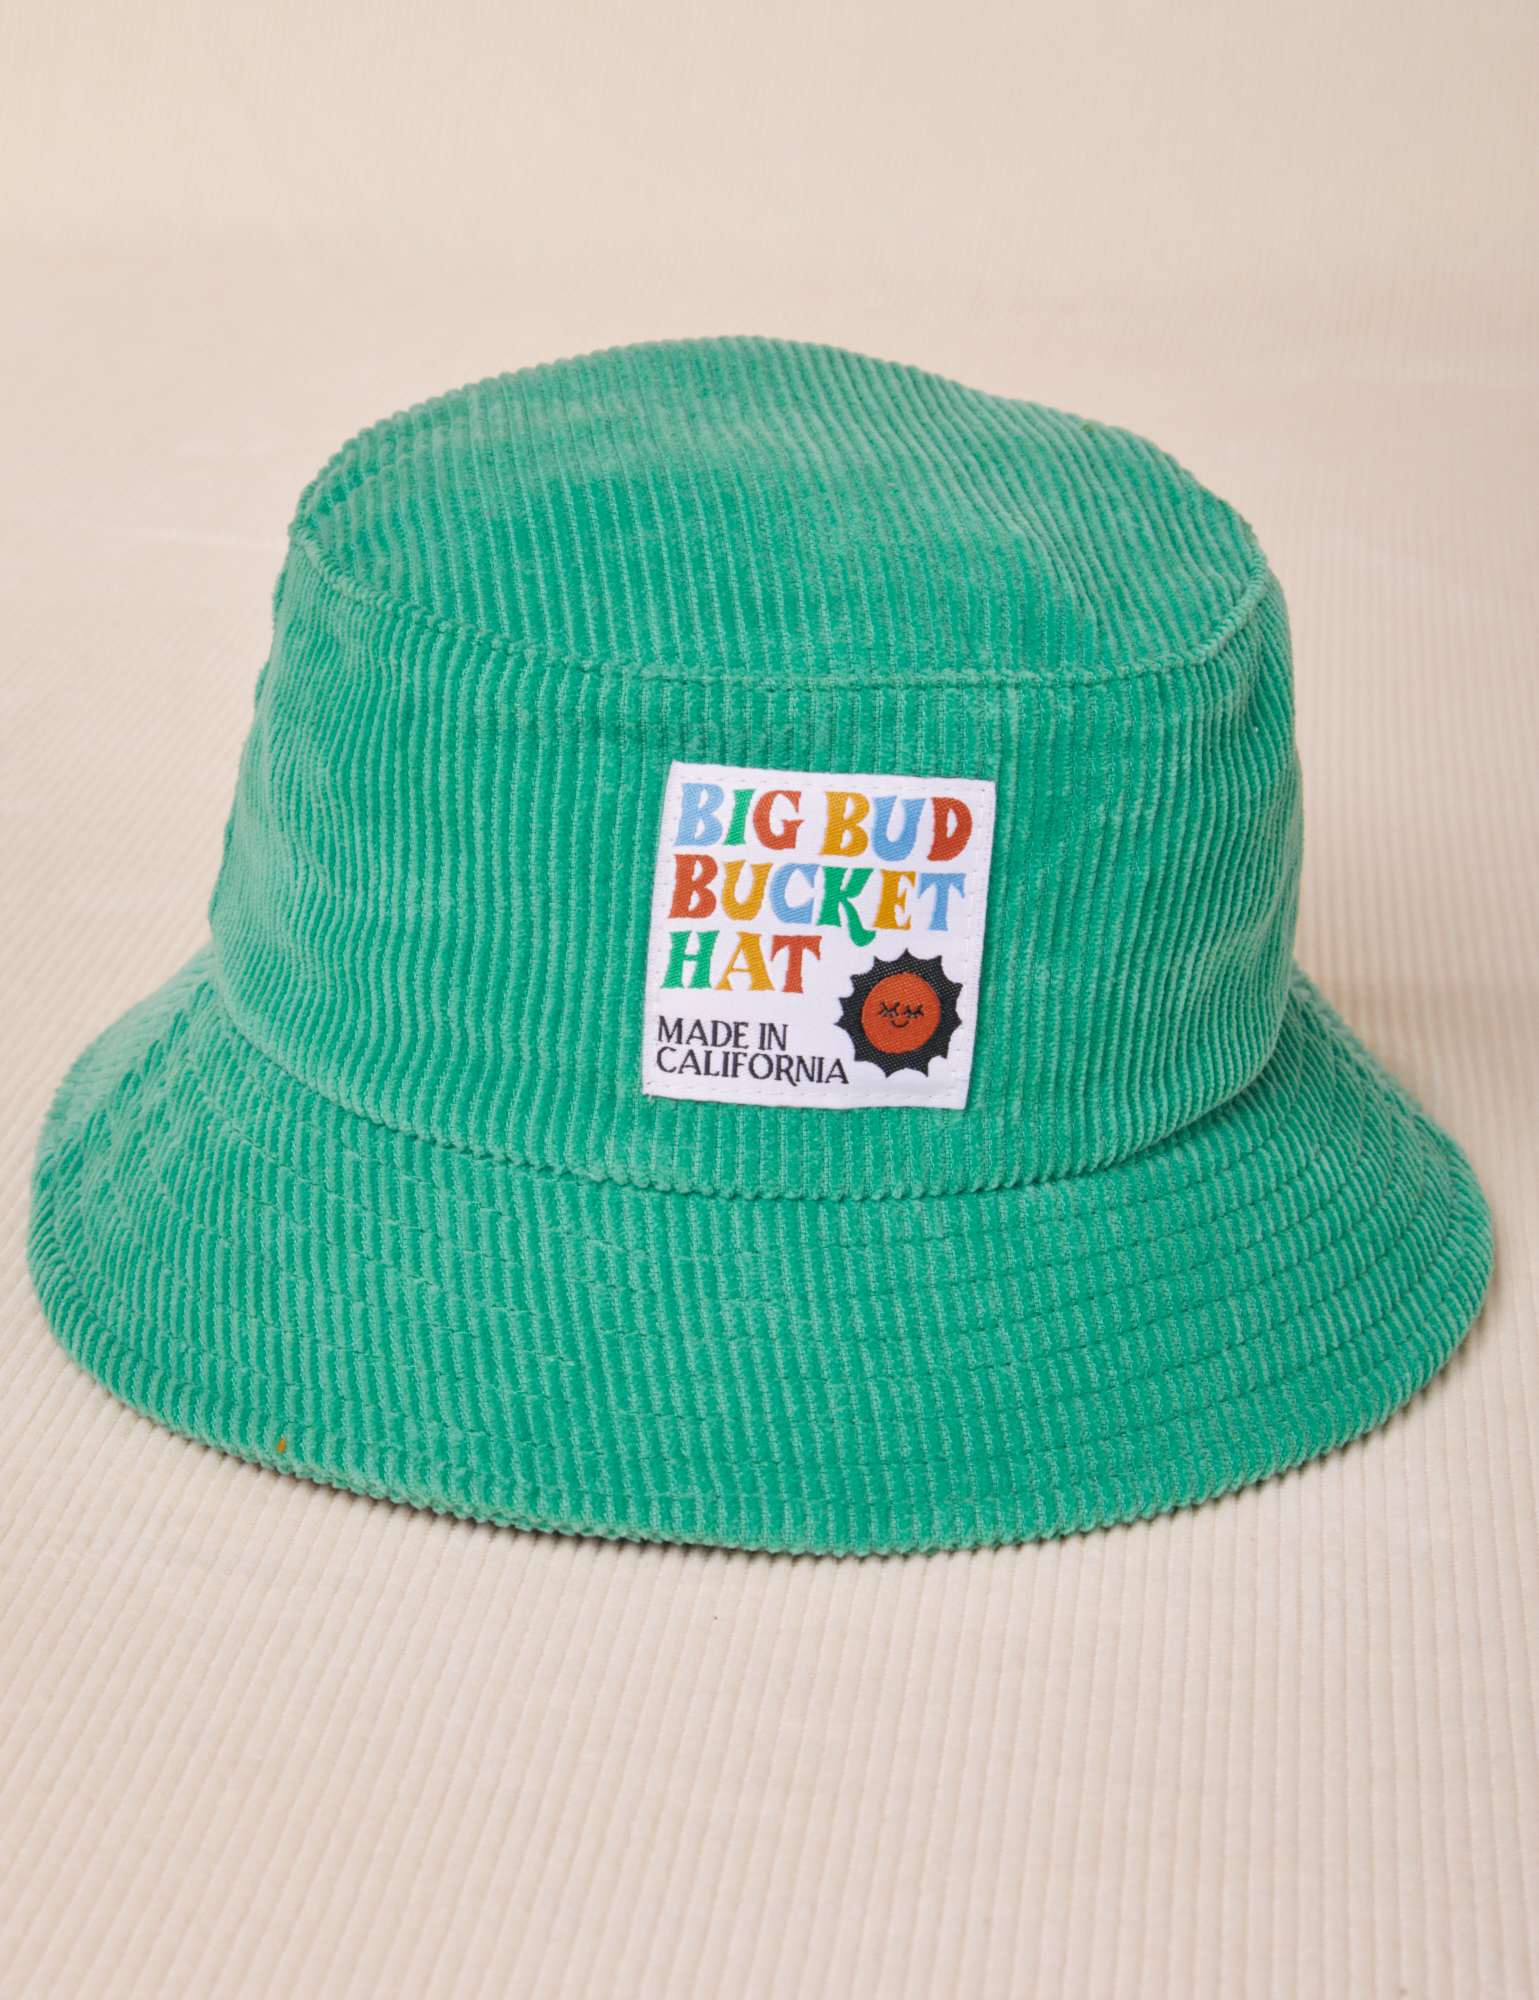 Big Bud Bucket Hat seafoam green